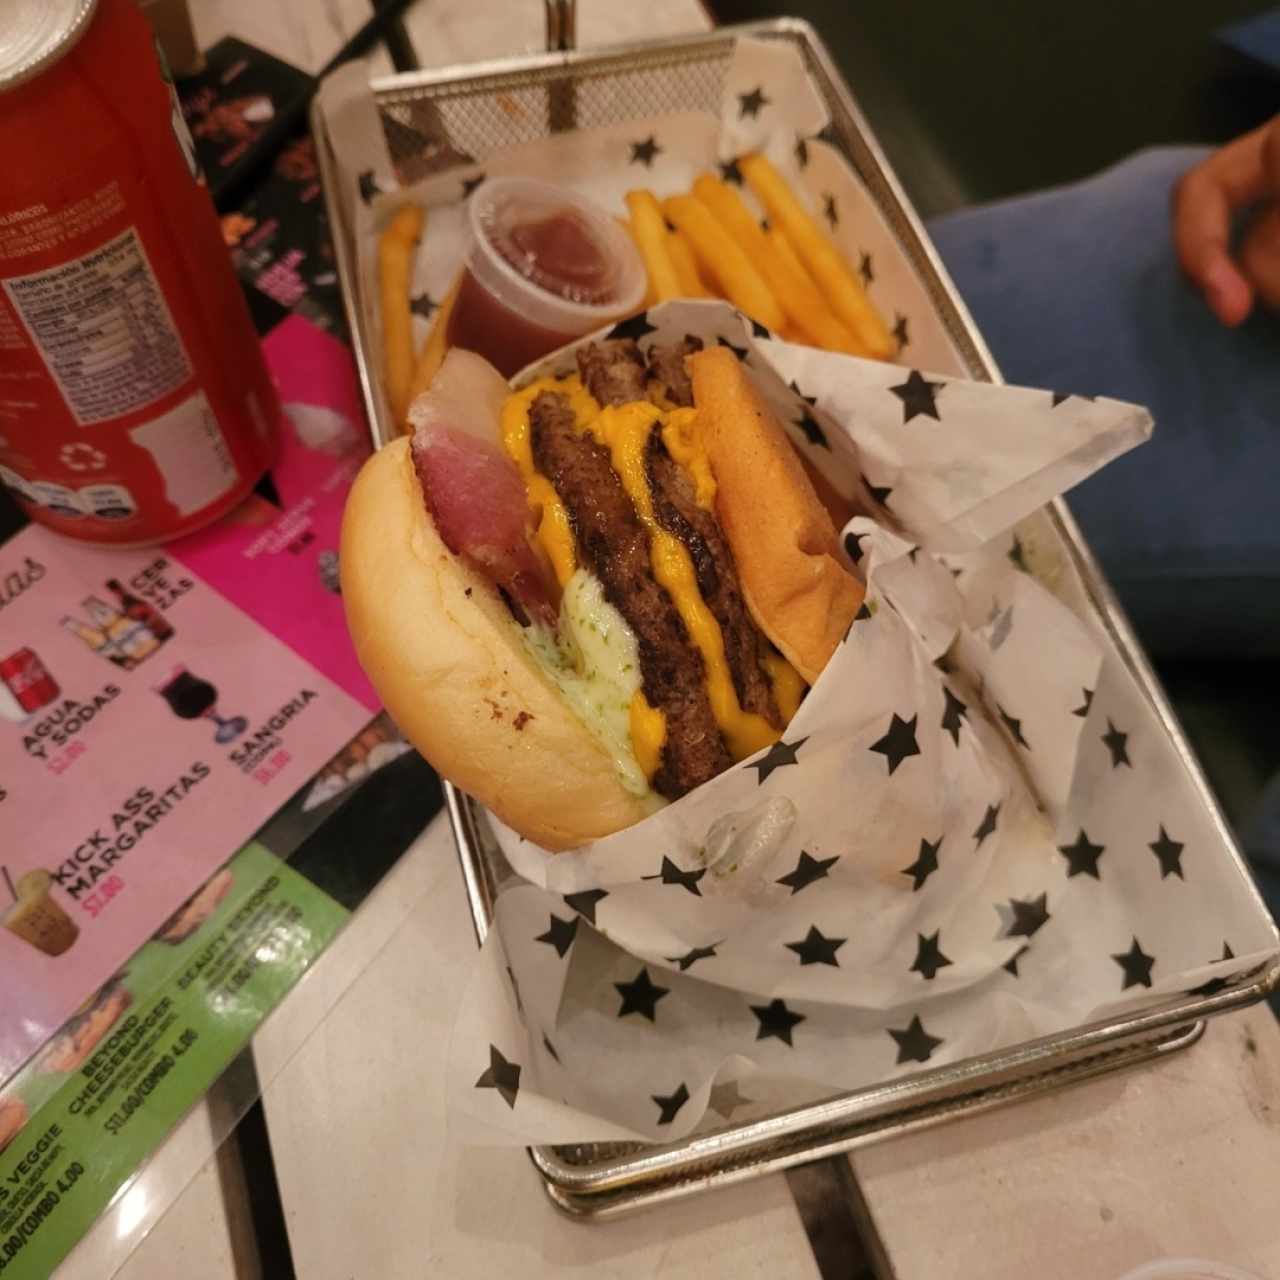 Amazing Burgers - Metaburger